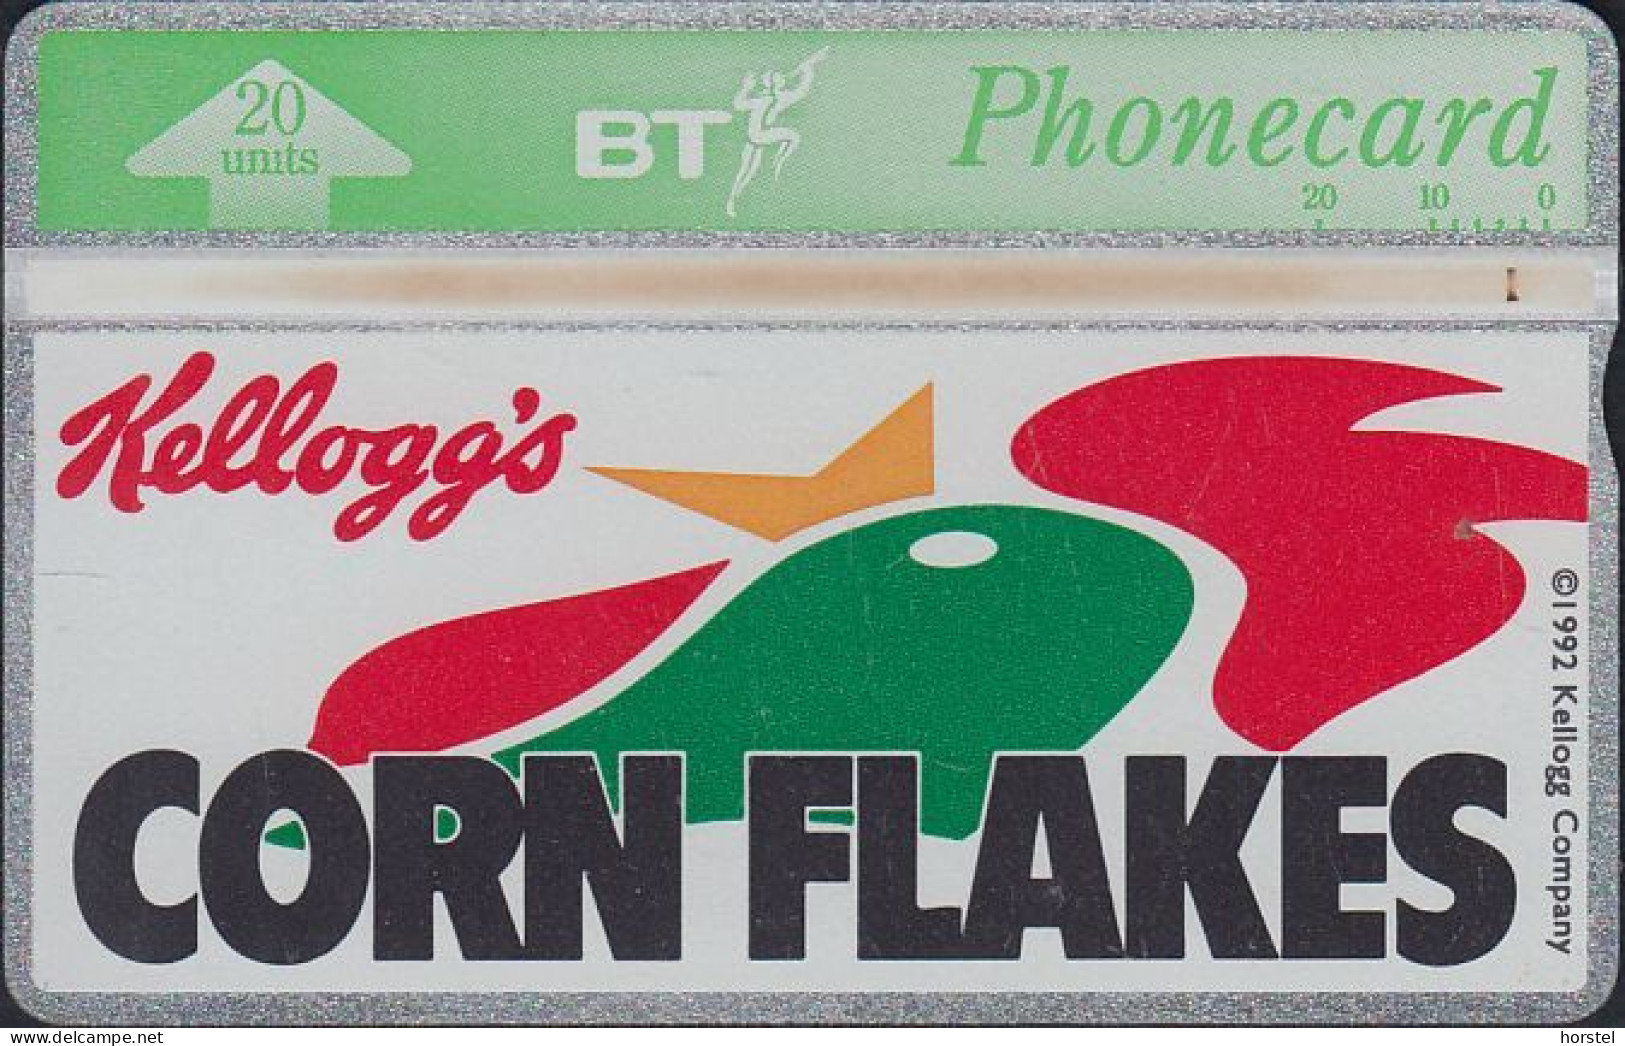 UK Bta 045 Kellogg's Corn Flakes - 20 Units - 321D - BT Advertising Issues